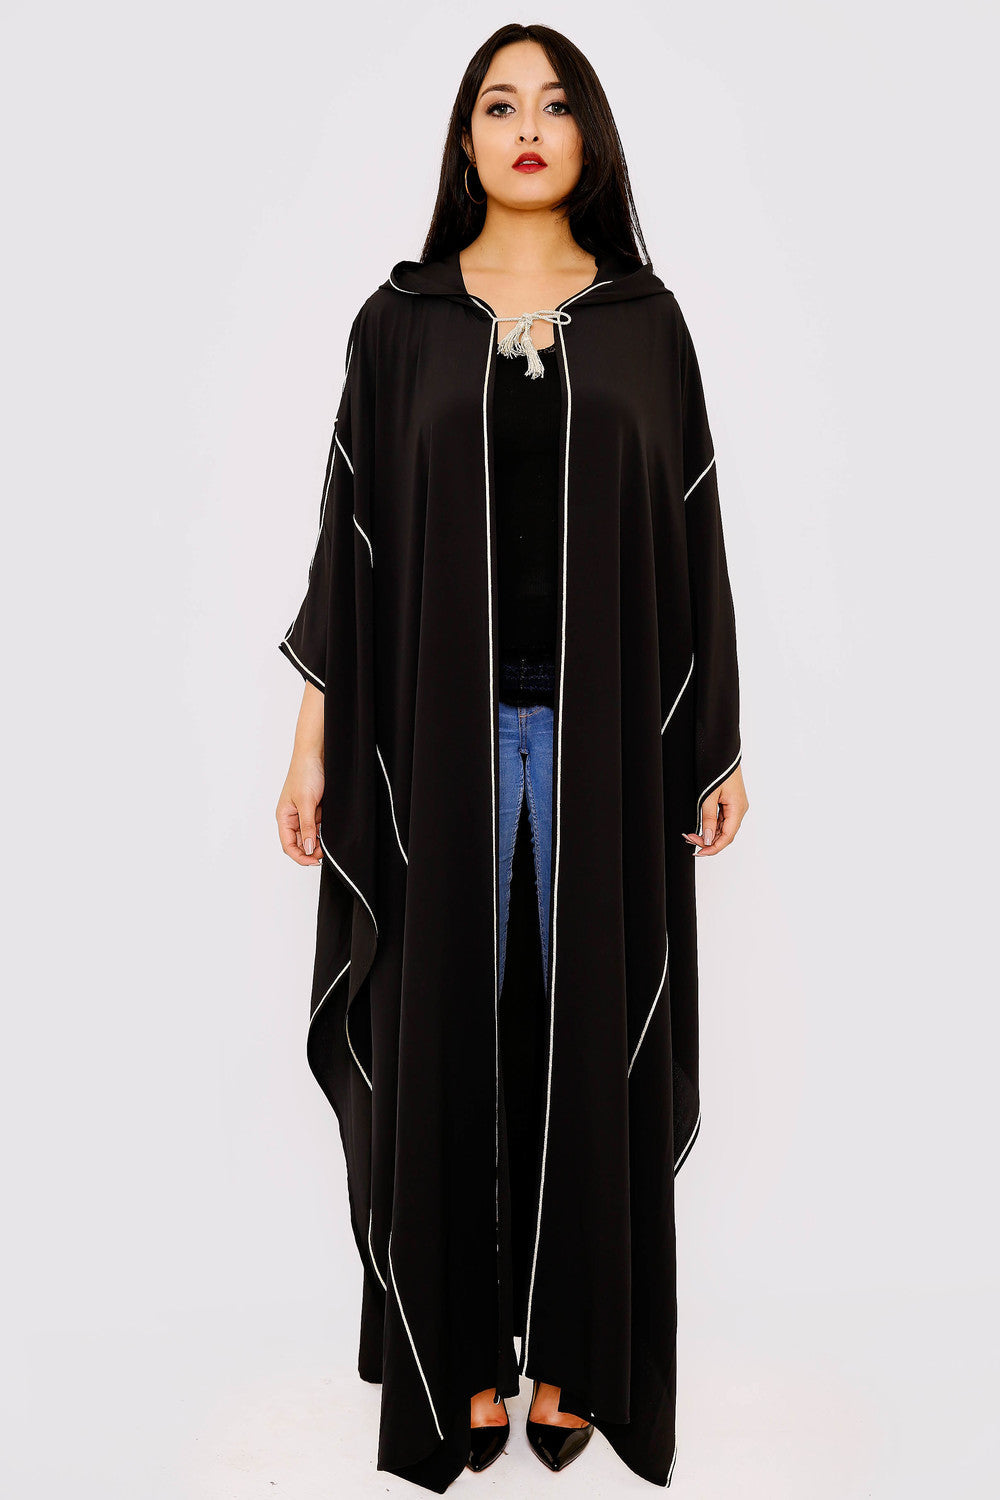 Selham Dina Full-Length Hooded Traditional Cape in Black